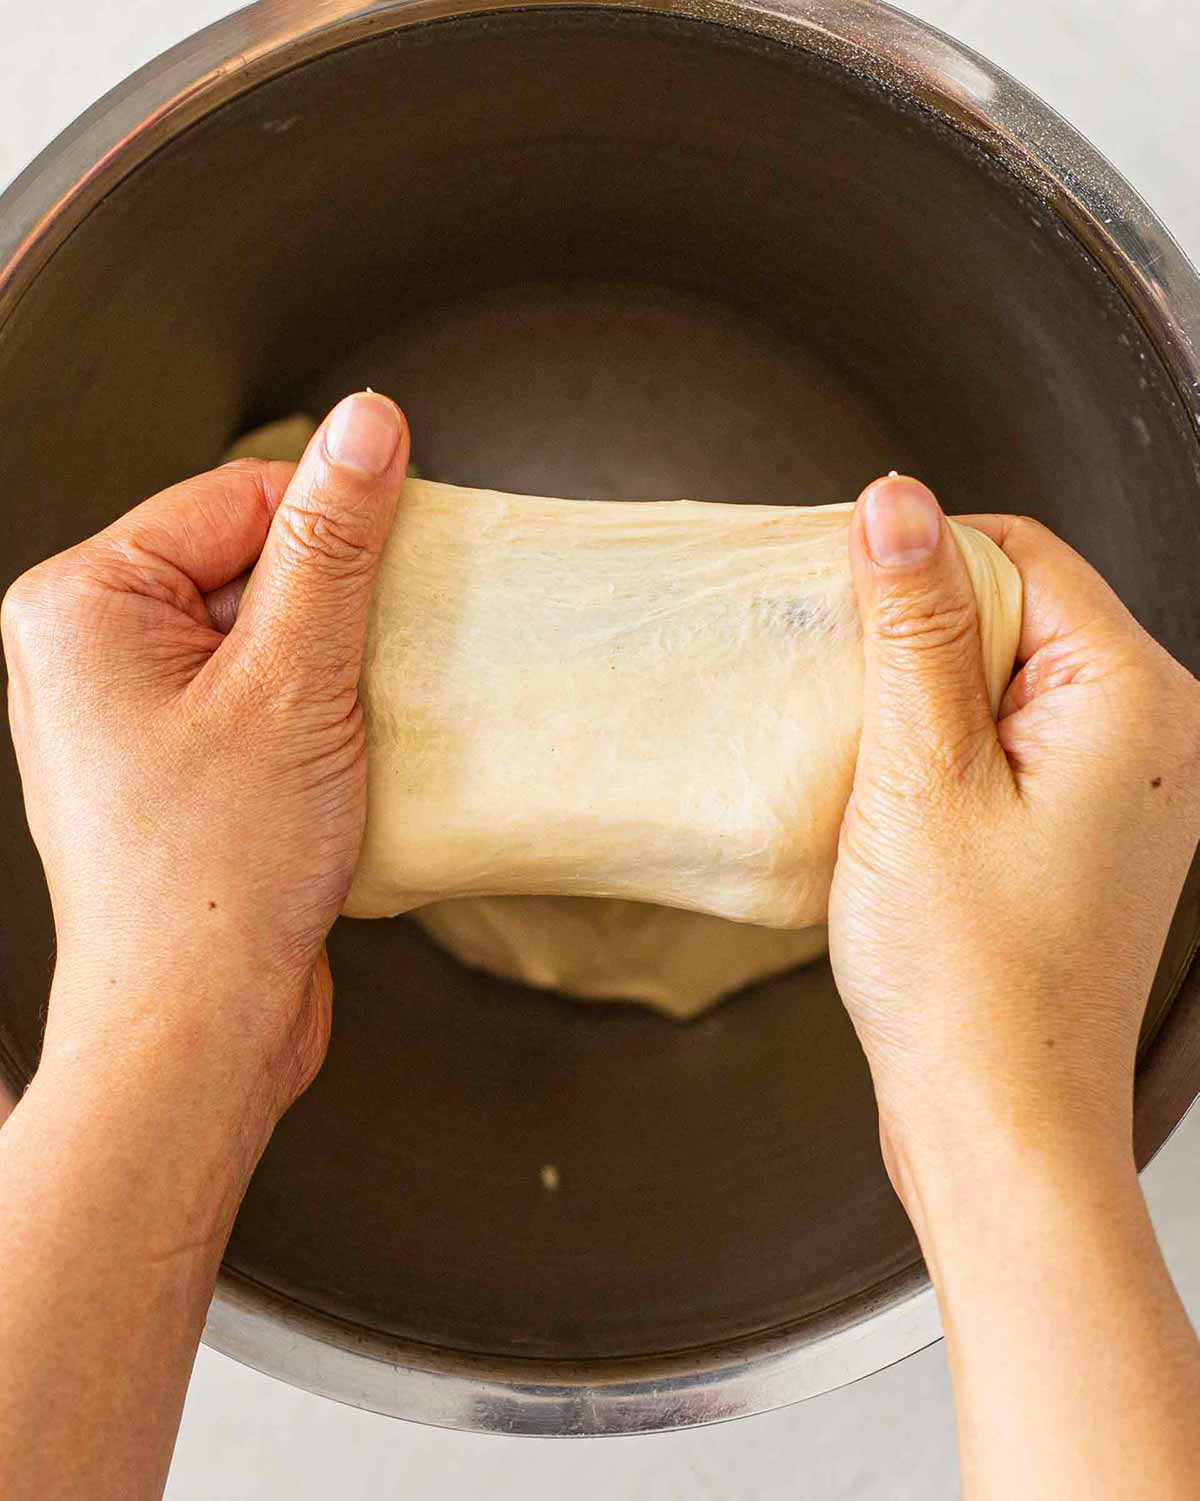 Hands stretching piece of brioche dough demonstrating window pane test.